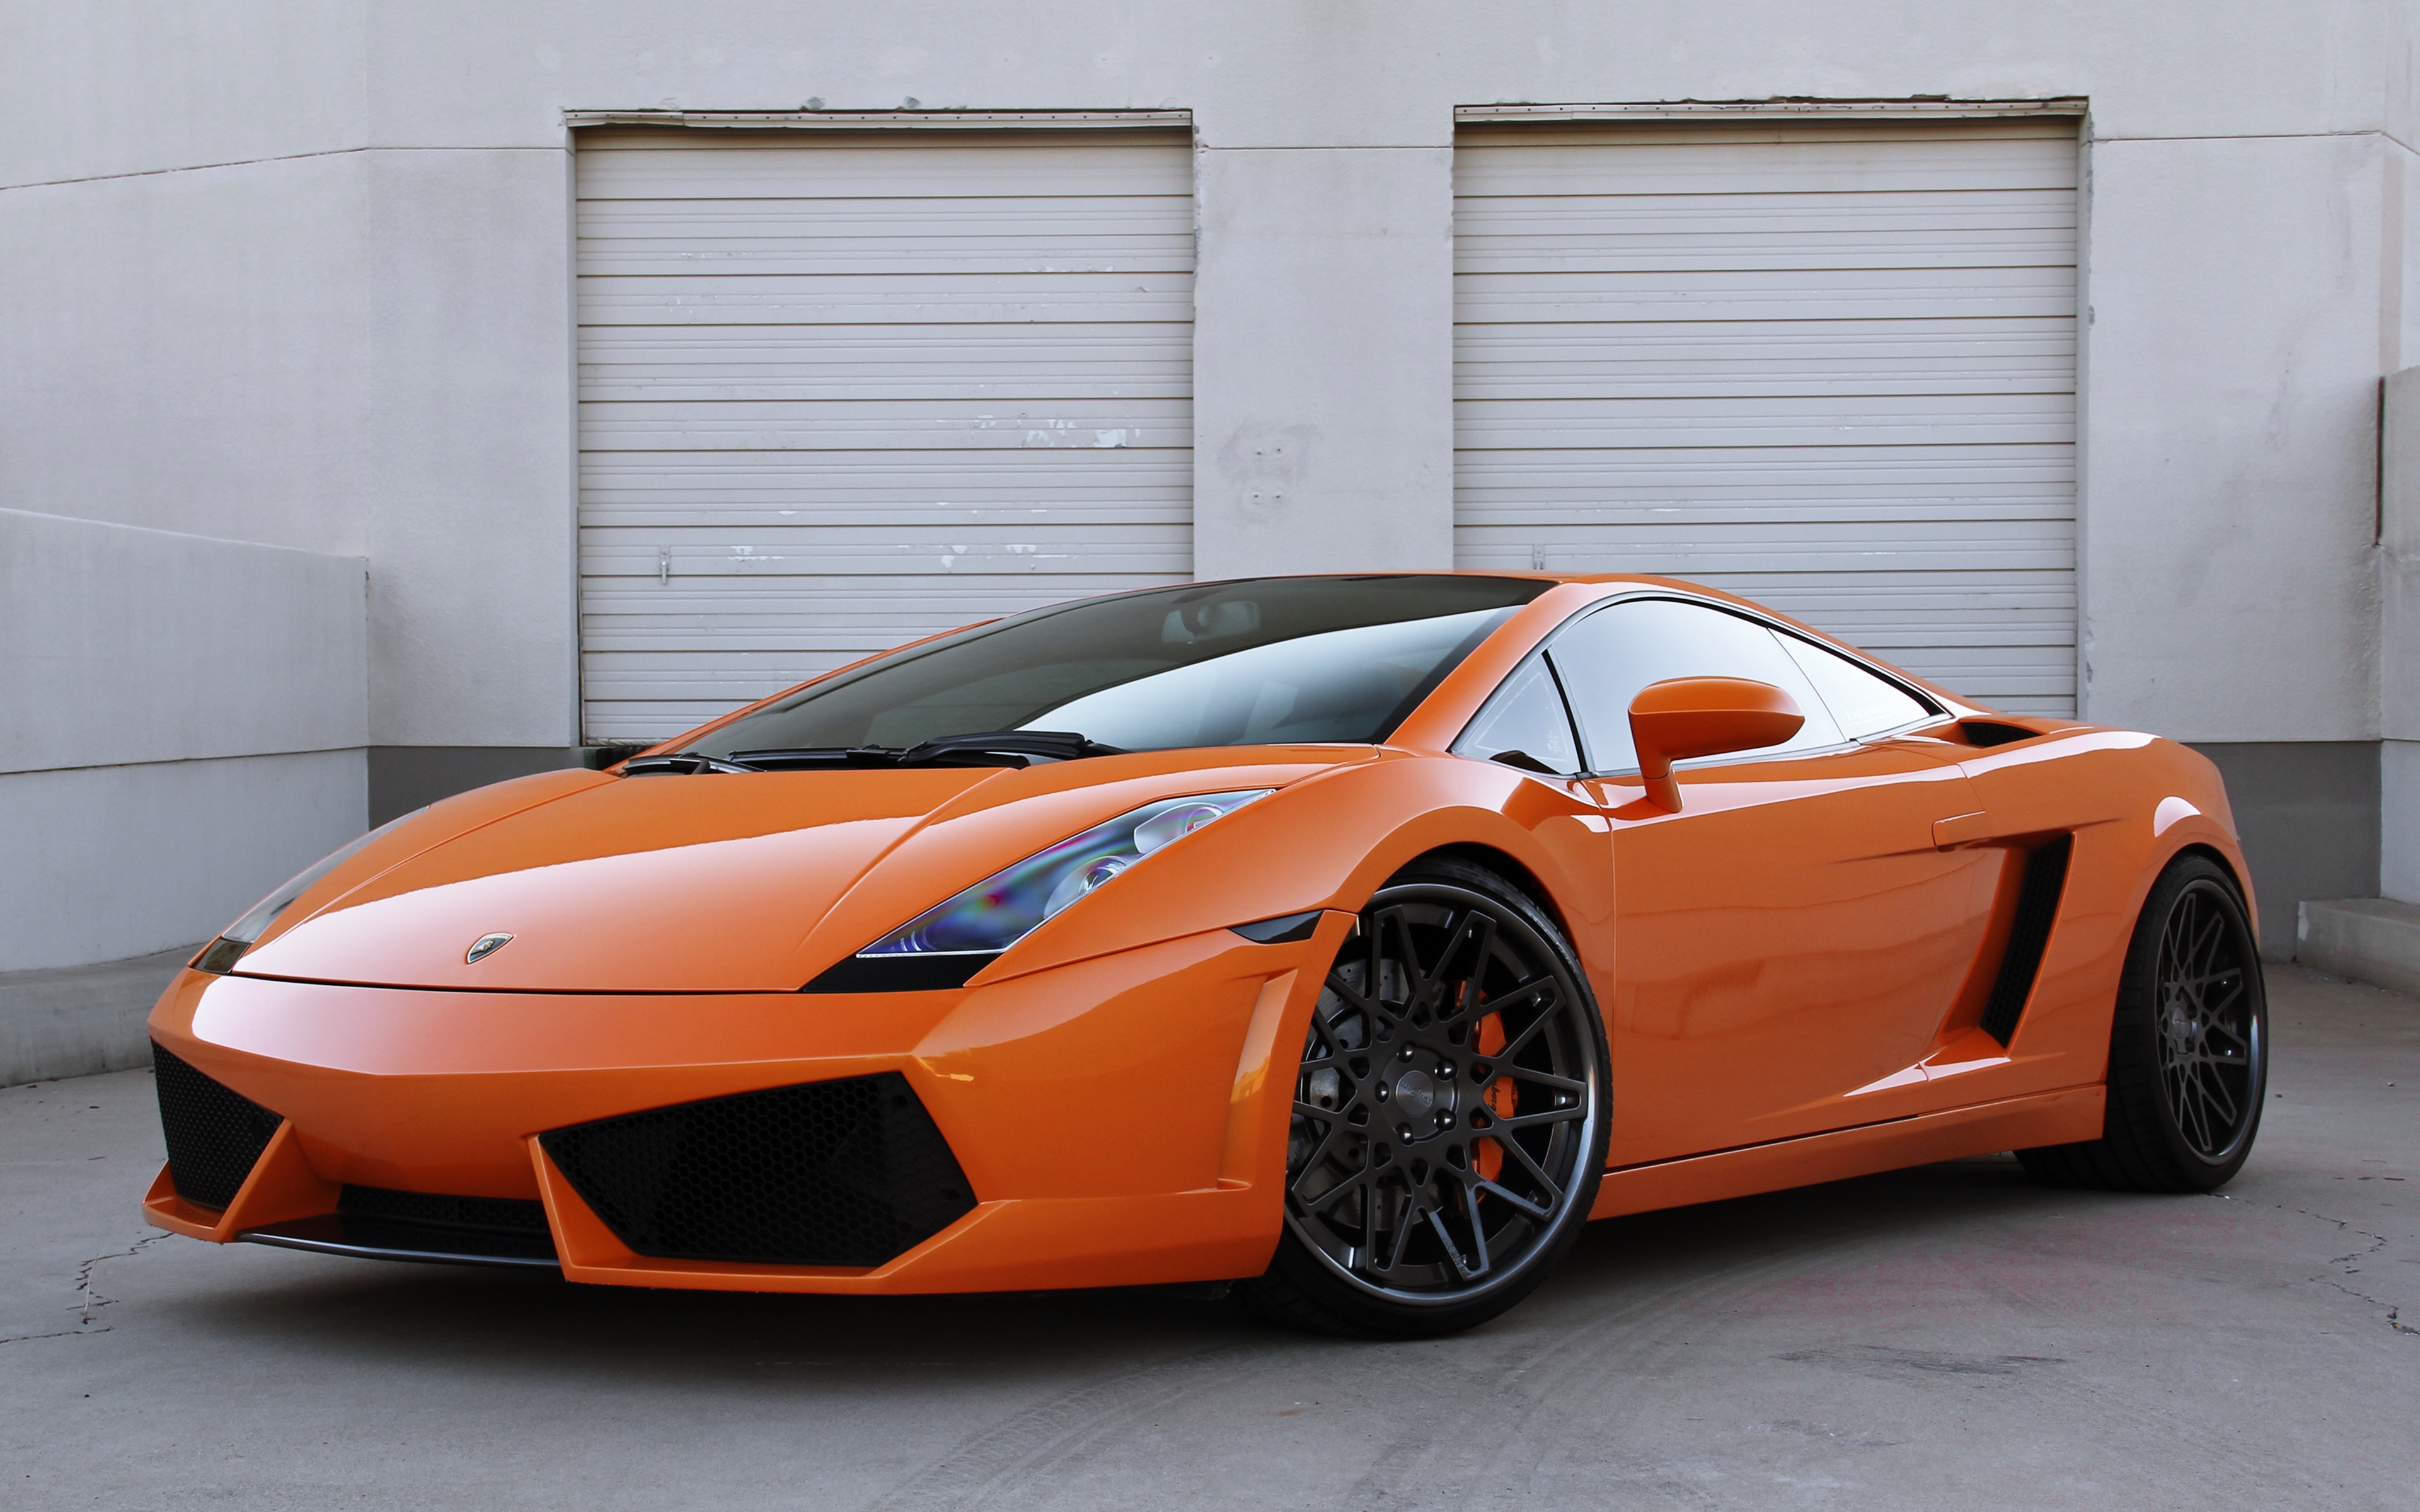 Laden Sie das Lamborghini, Autos, Lamborghini Gallardo, Fahrzeuge, Orangefarbenes Auto-Bild kostenlos auf Ihren PC-Desktop herunter